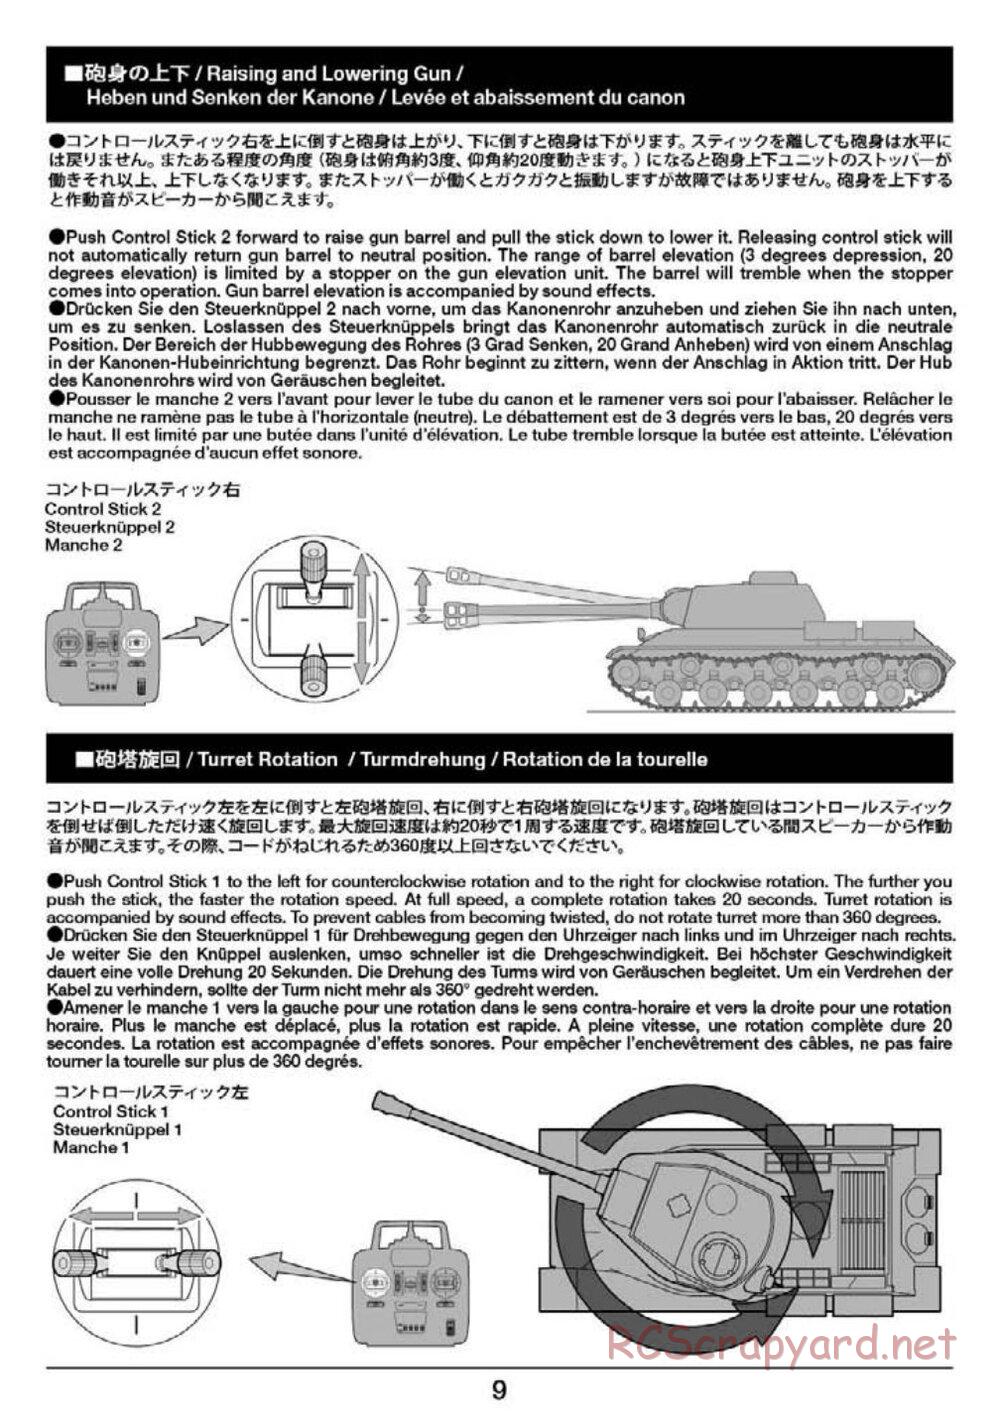 Tamiya - Russian Heavy Tank JS-2 1944 ChKZ - 1/16 Scale Chassis - Operation Manual - Page 9